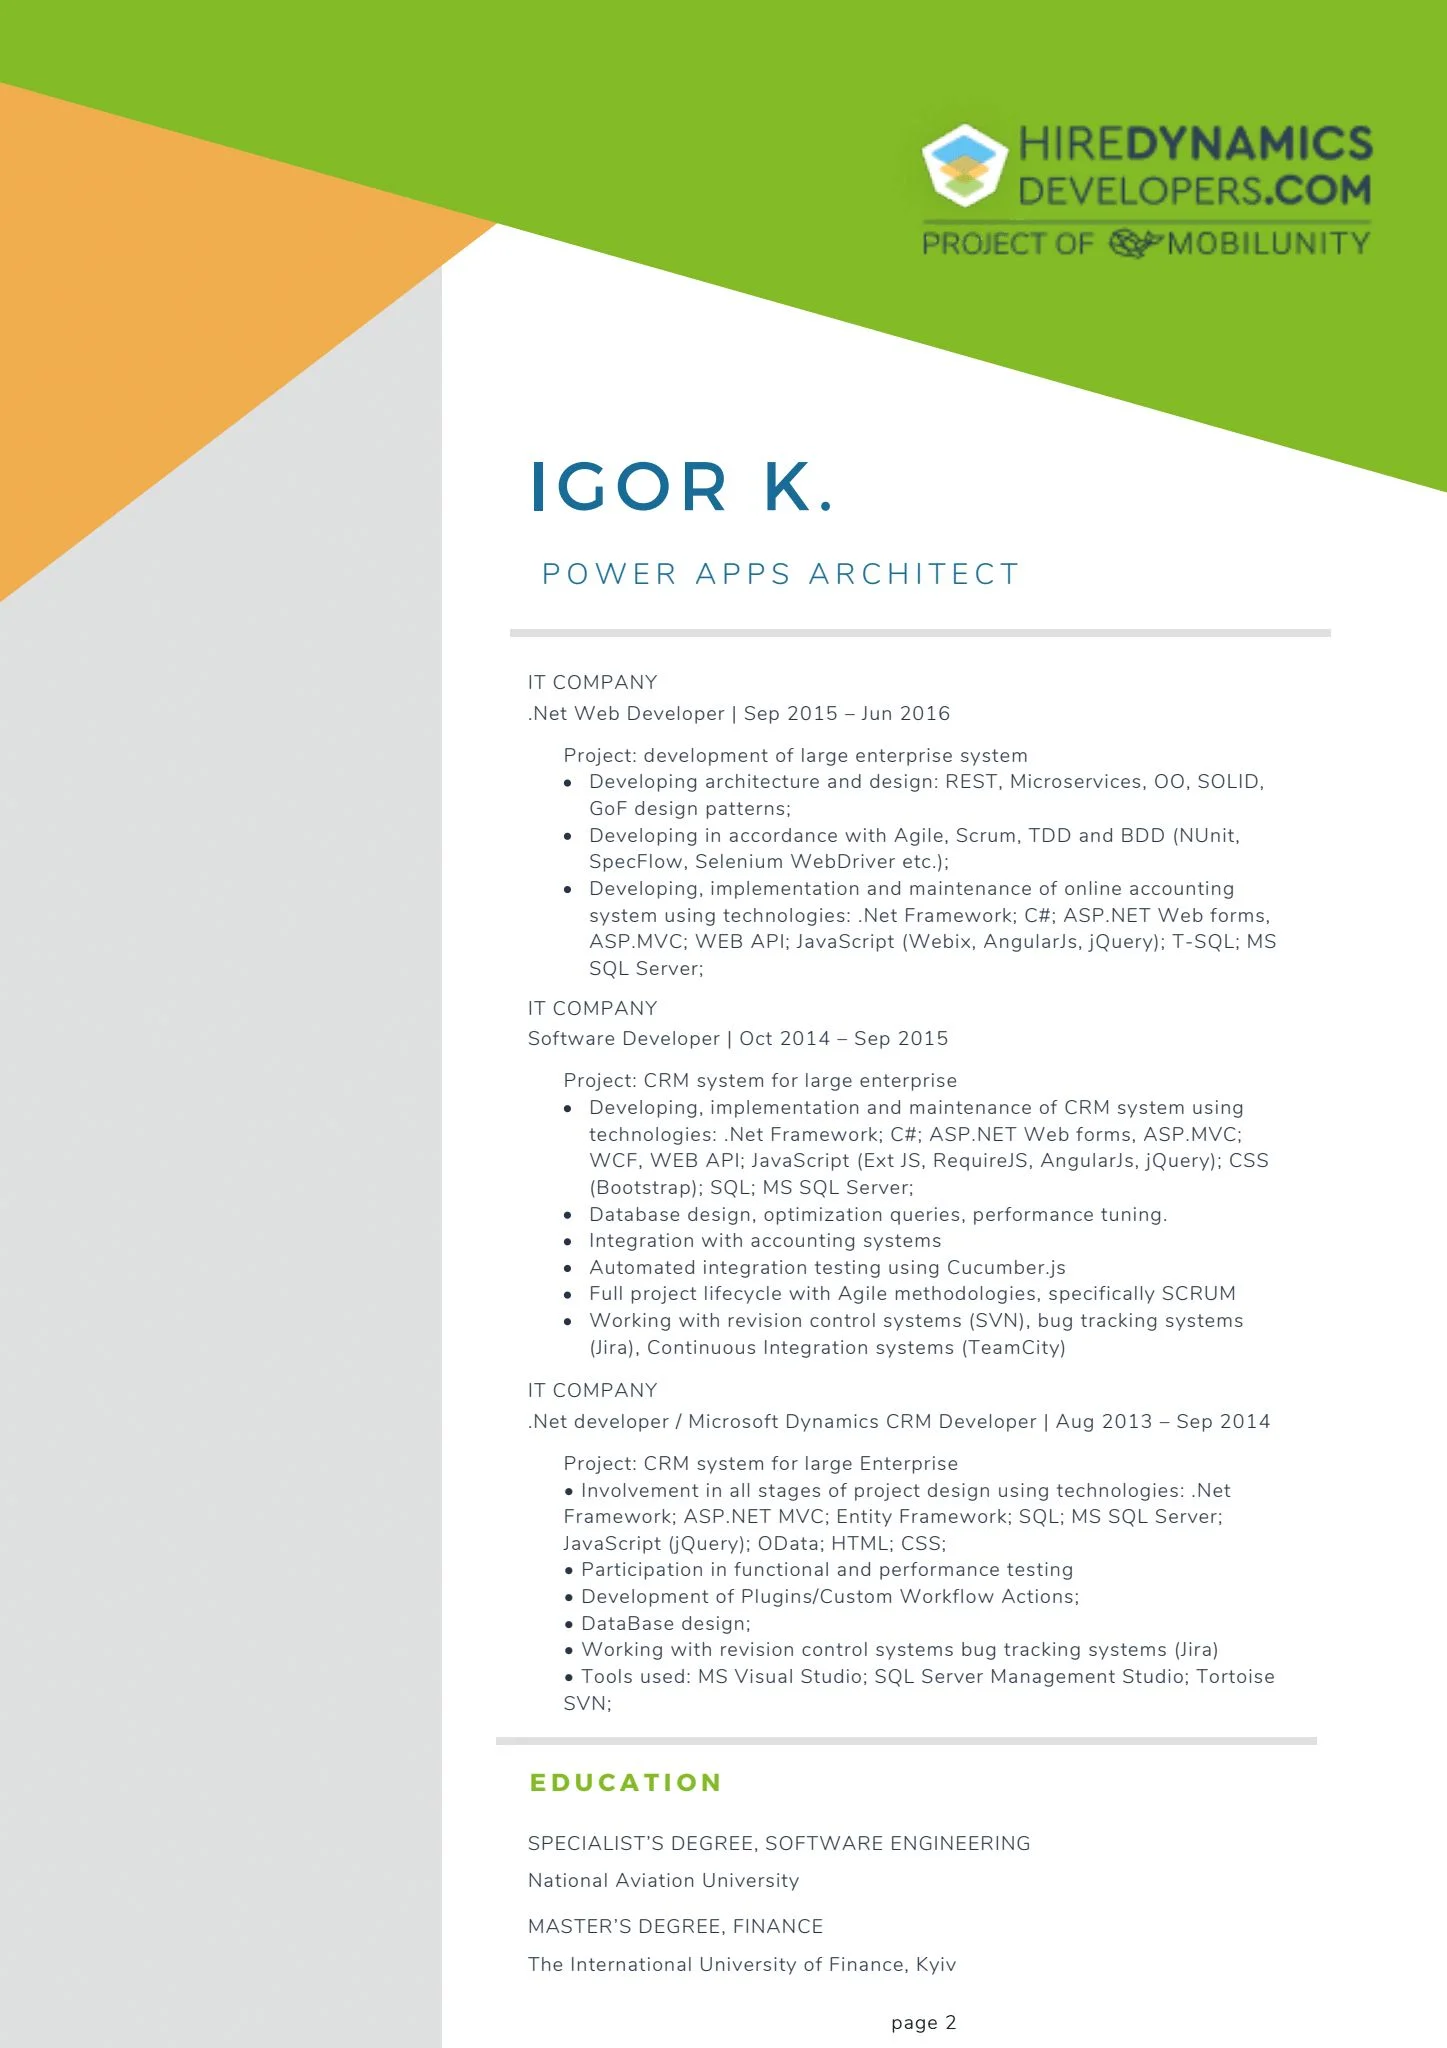 Ihor K. – Power Apps Architect